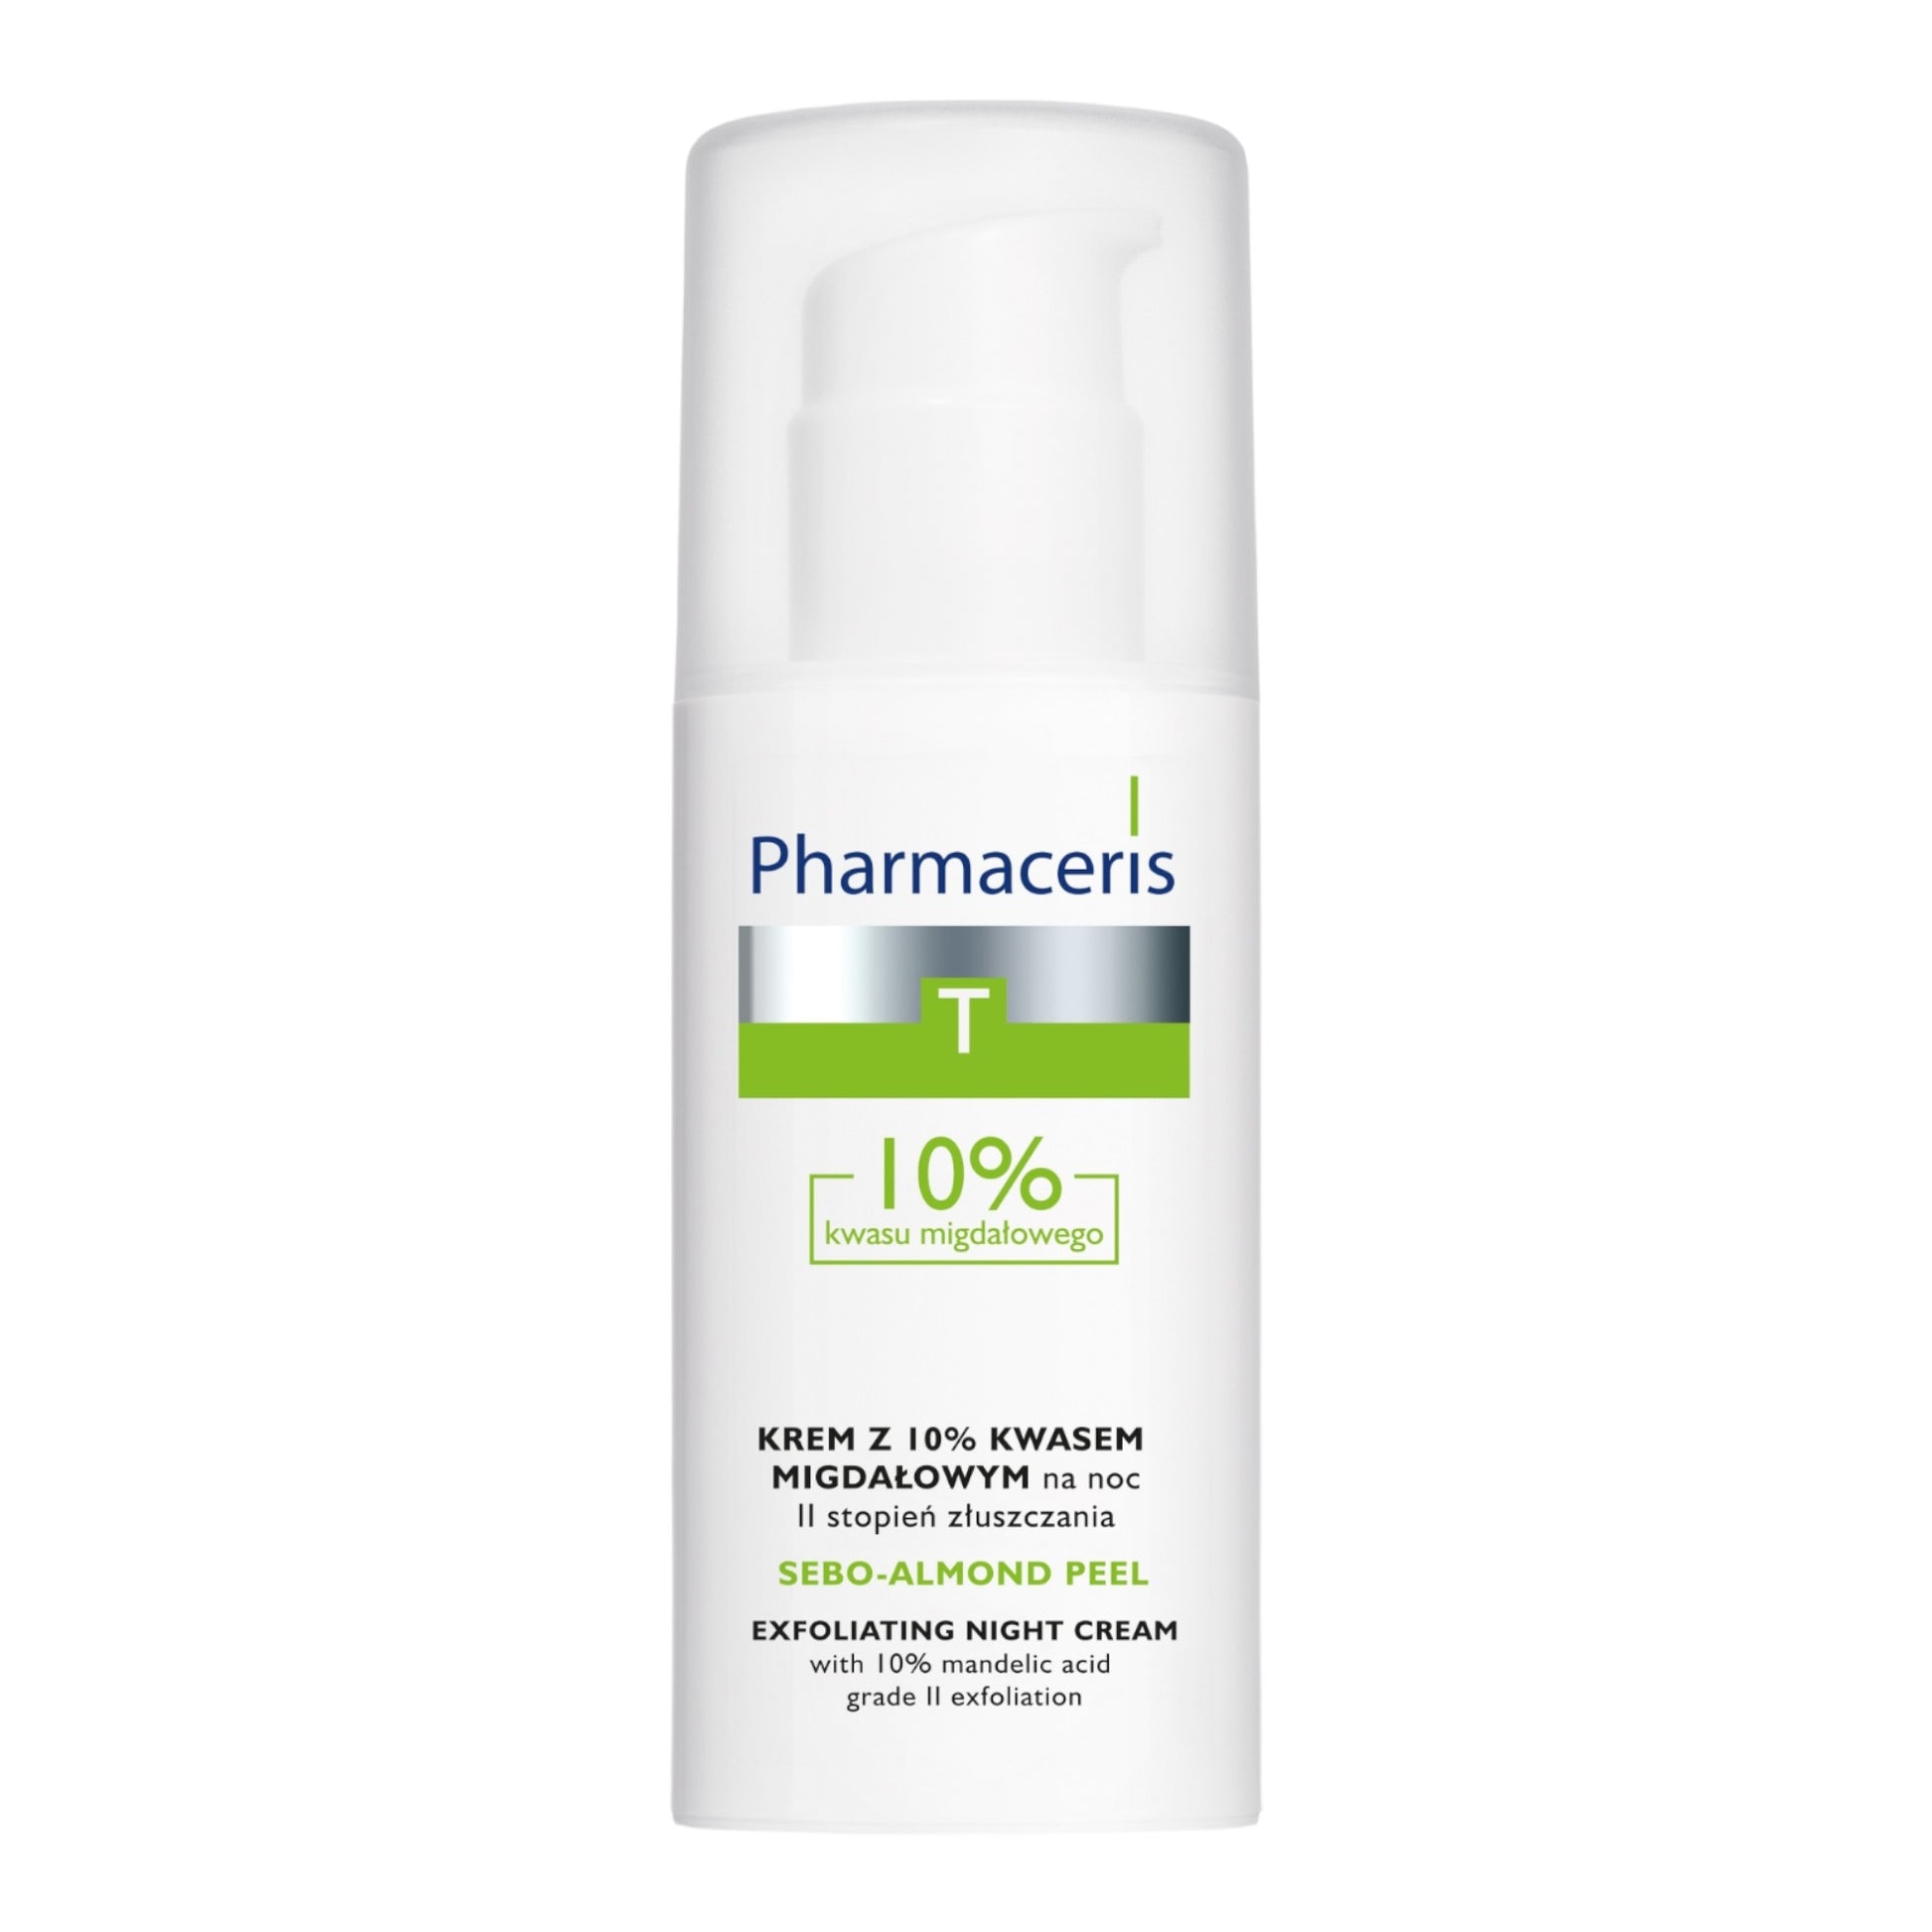 Pharmaceris T Acne Sebo Almond Peel night cream with 10% mandelic acid II degree of exfoliation